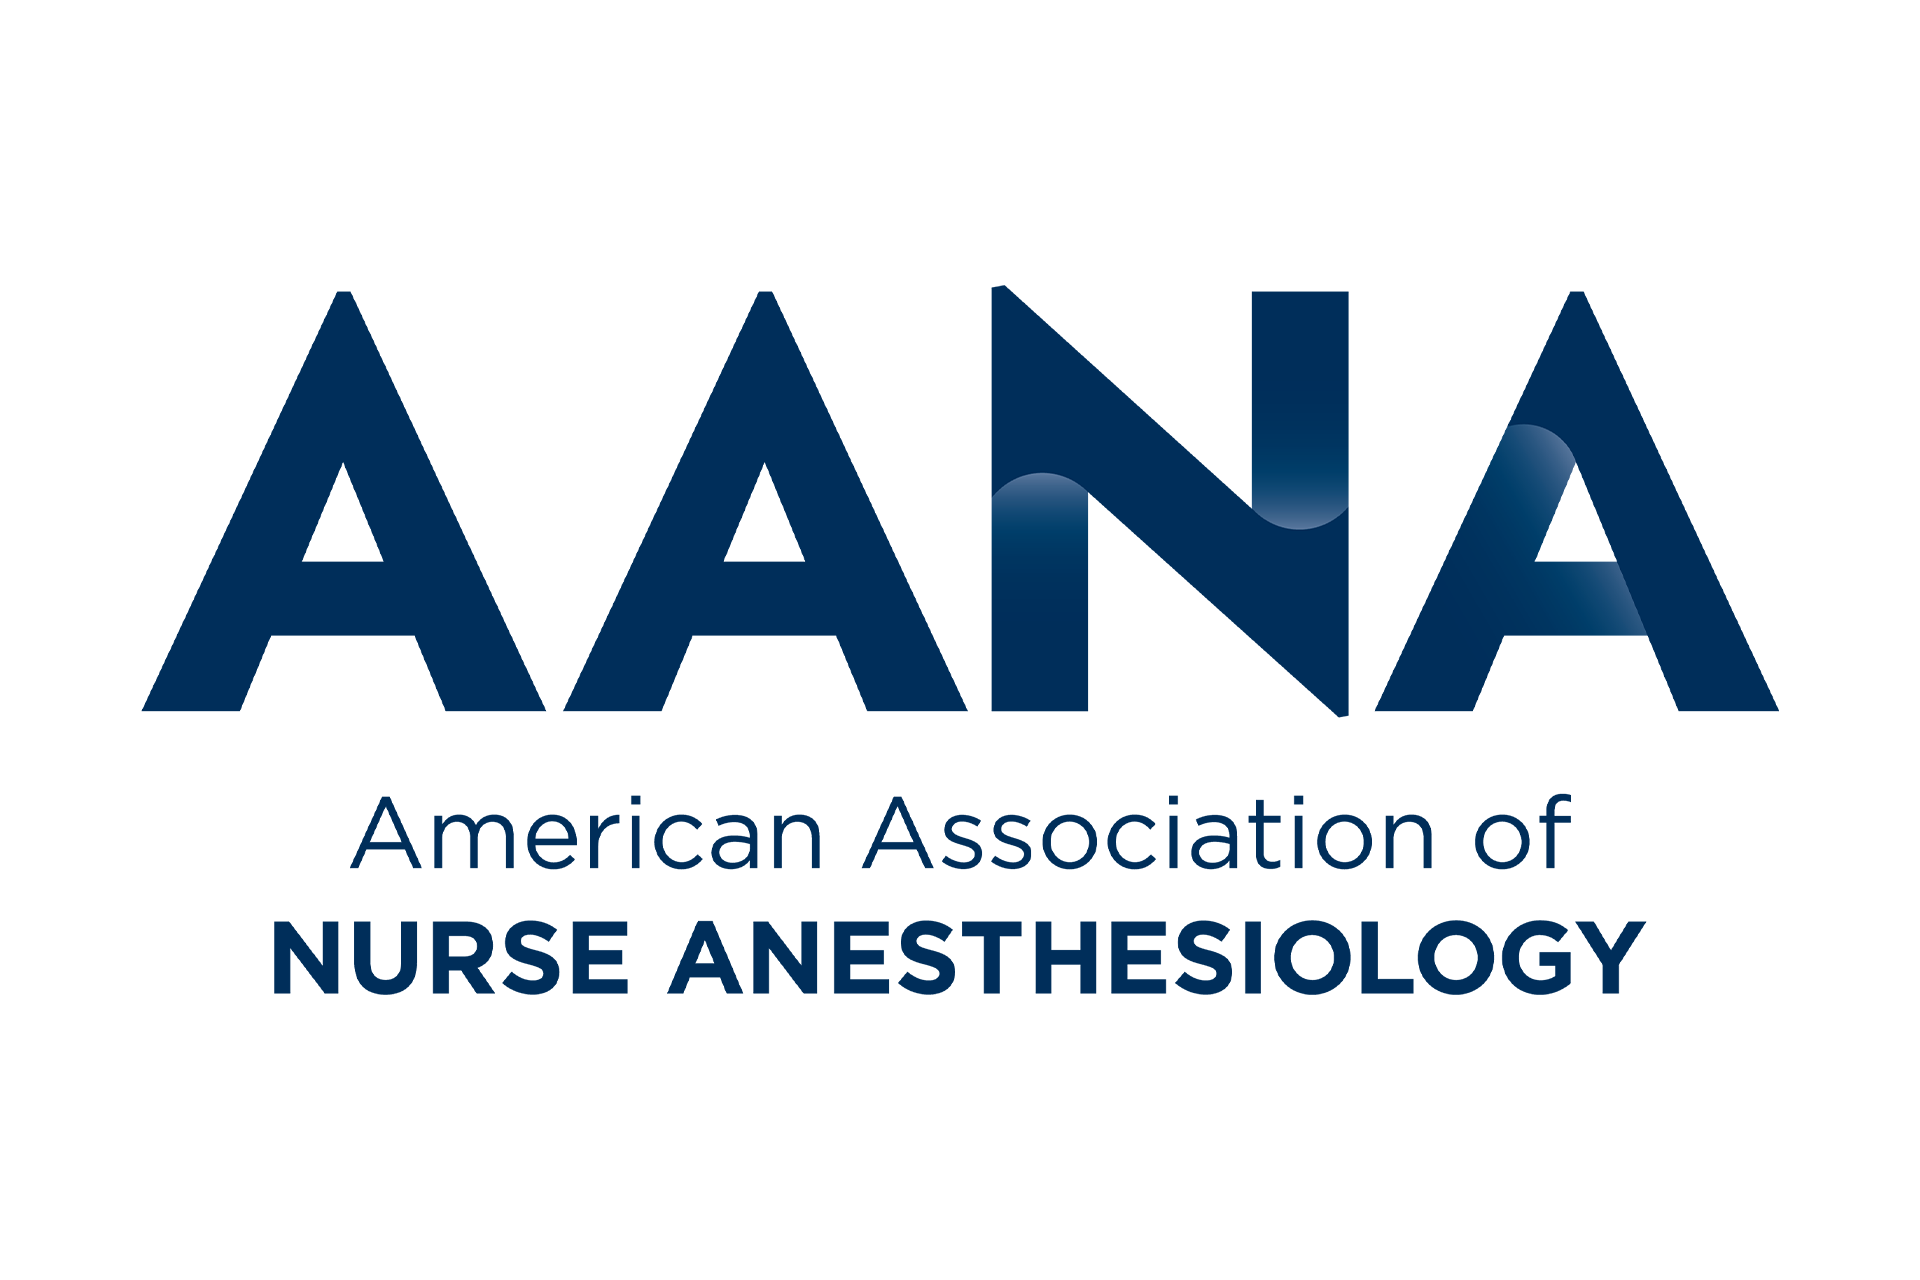 American Association of Nurse Anesthesiology logo